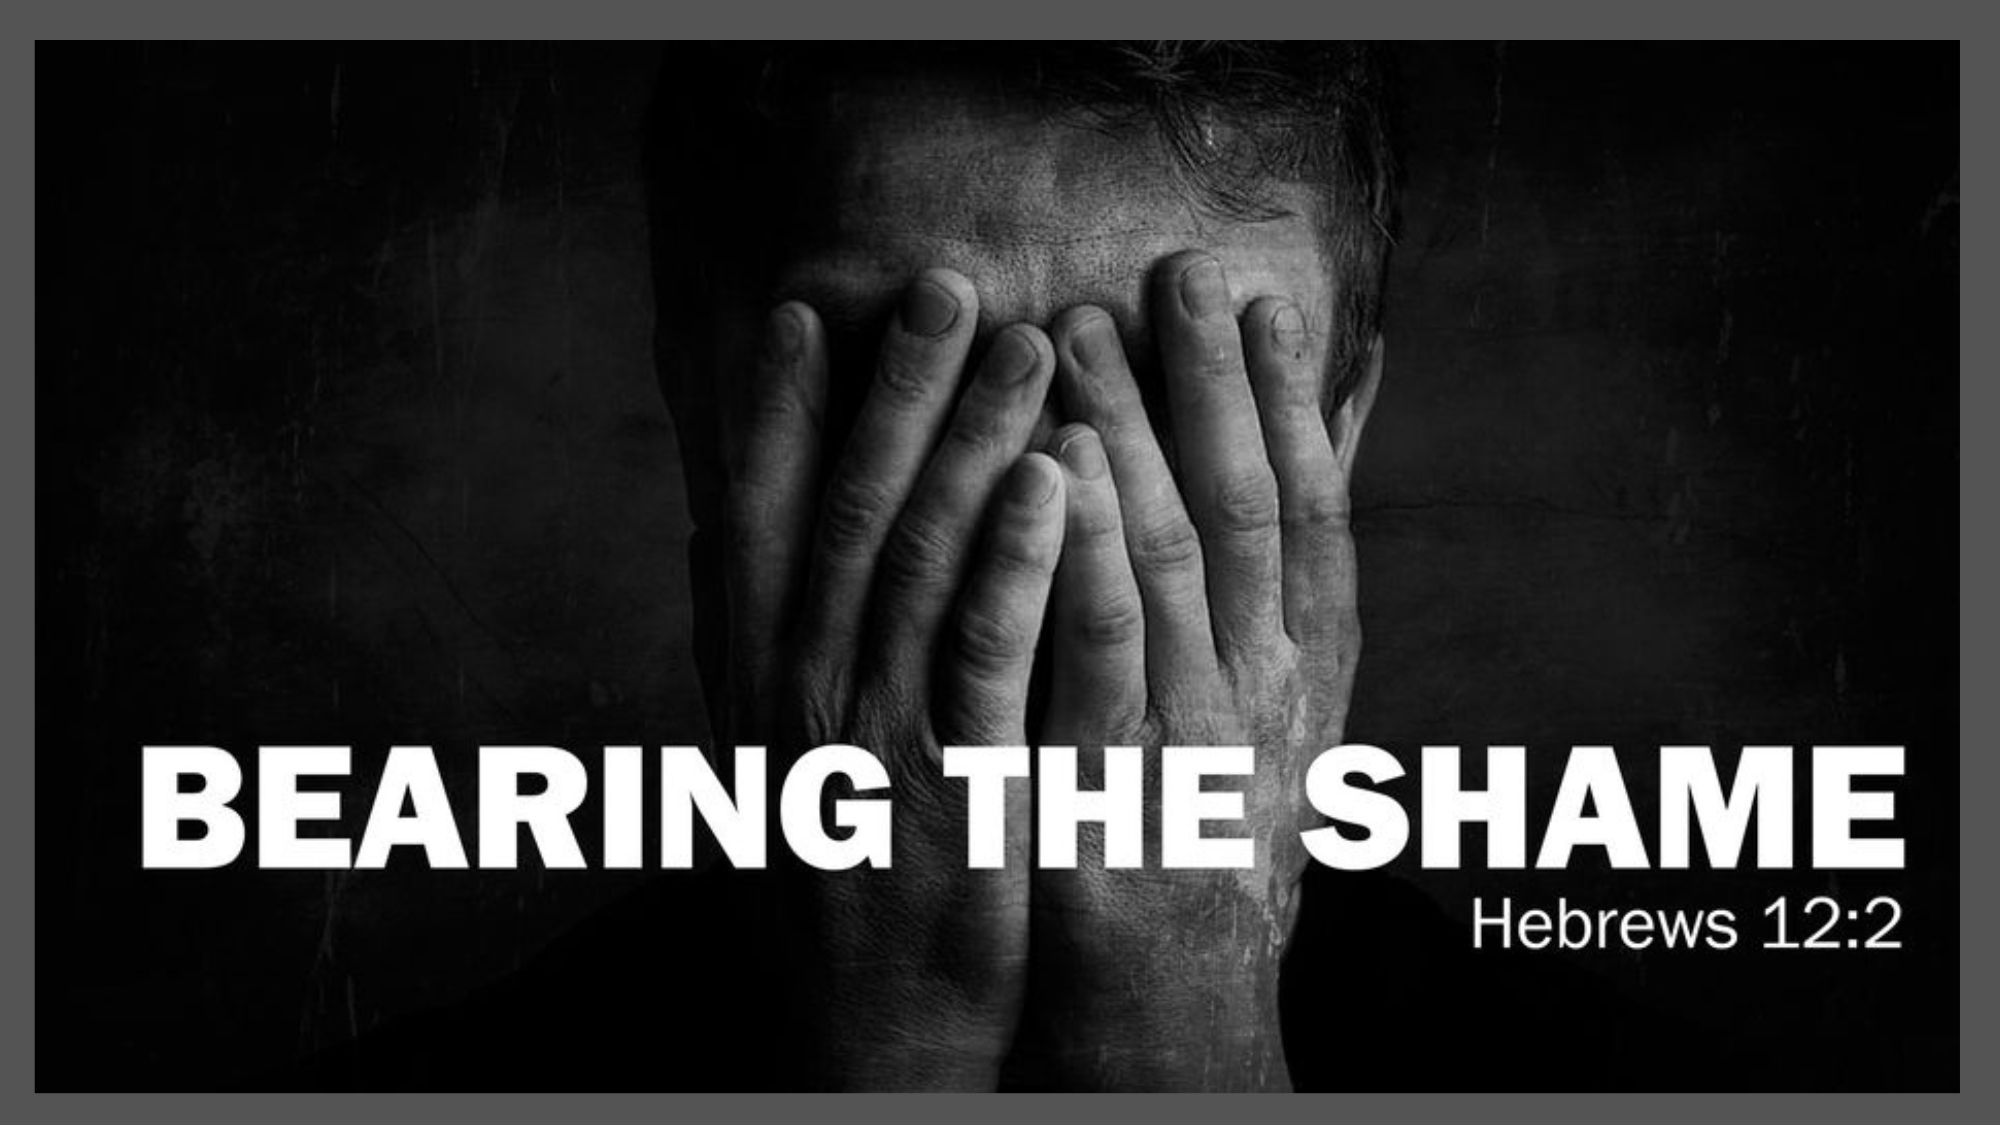 "Bearing the Shame